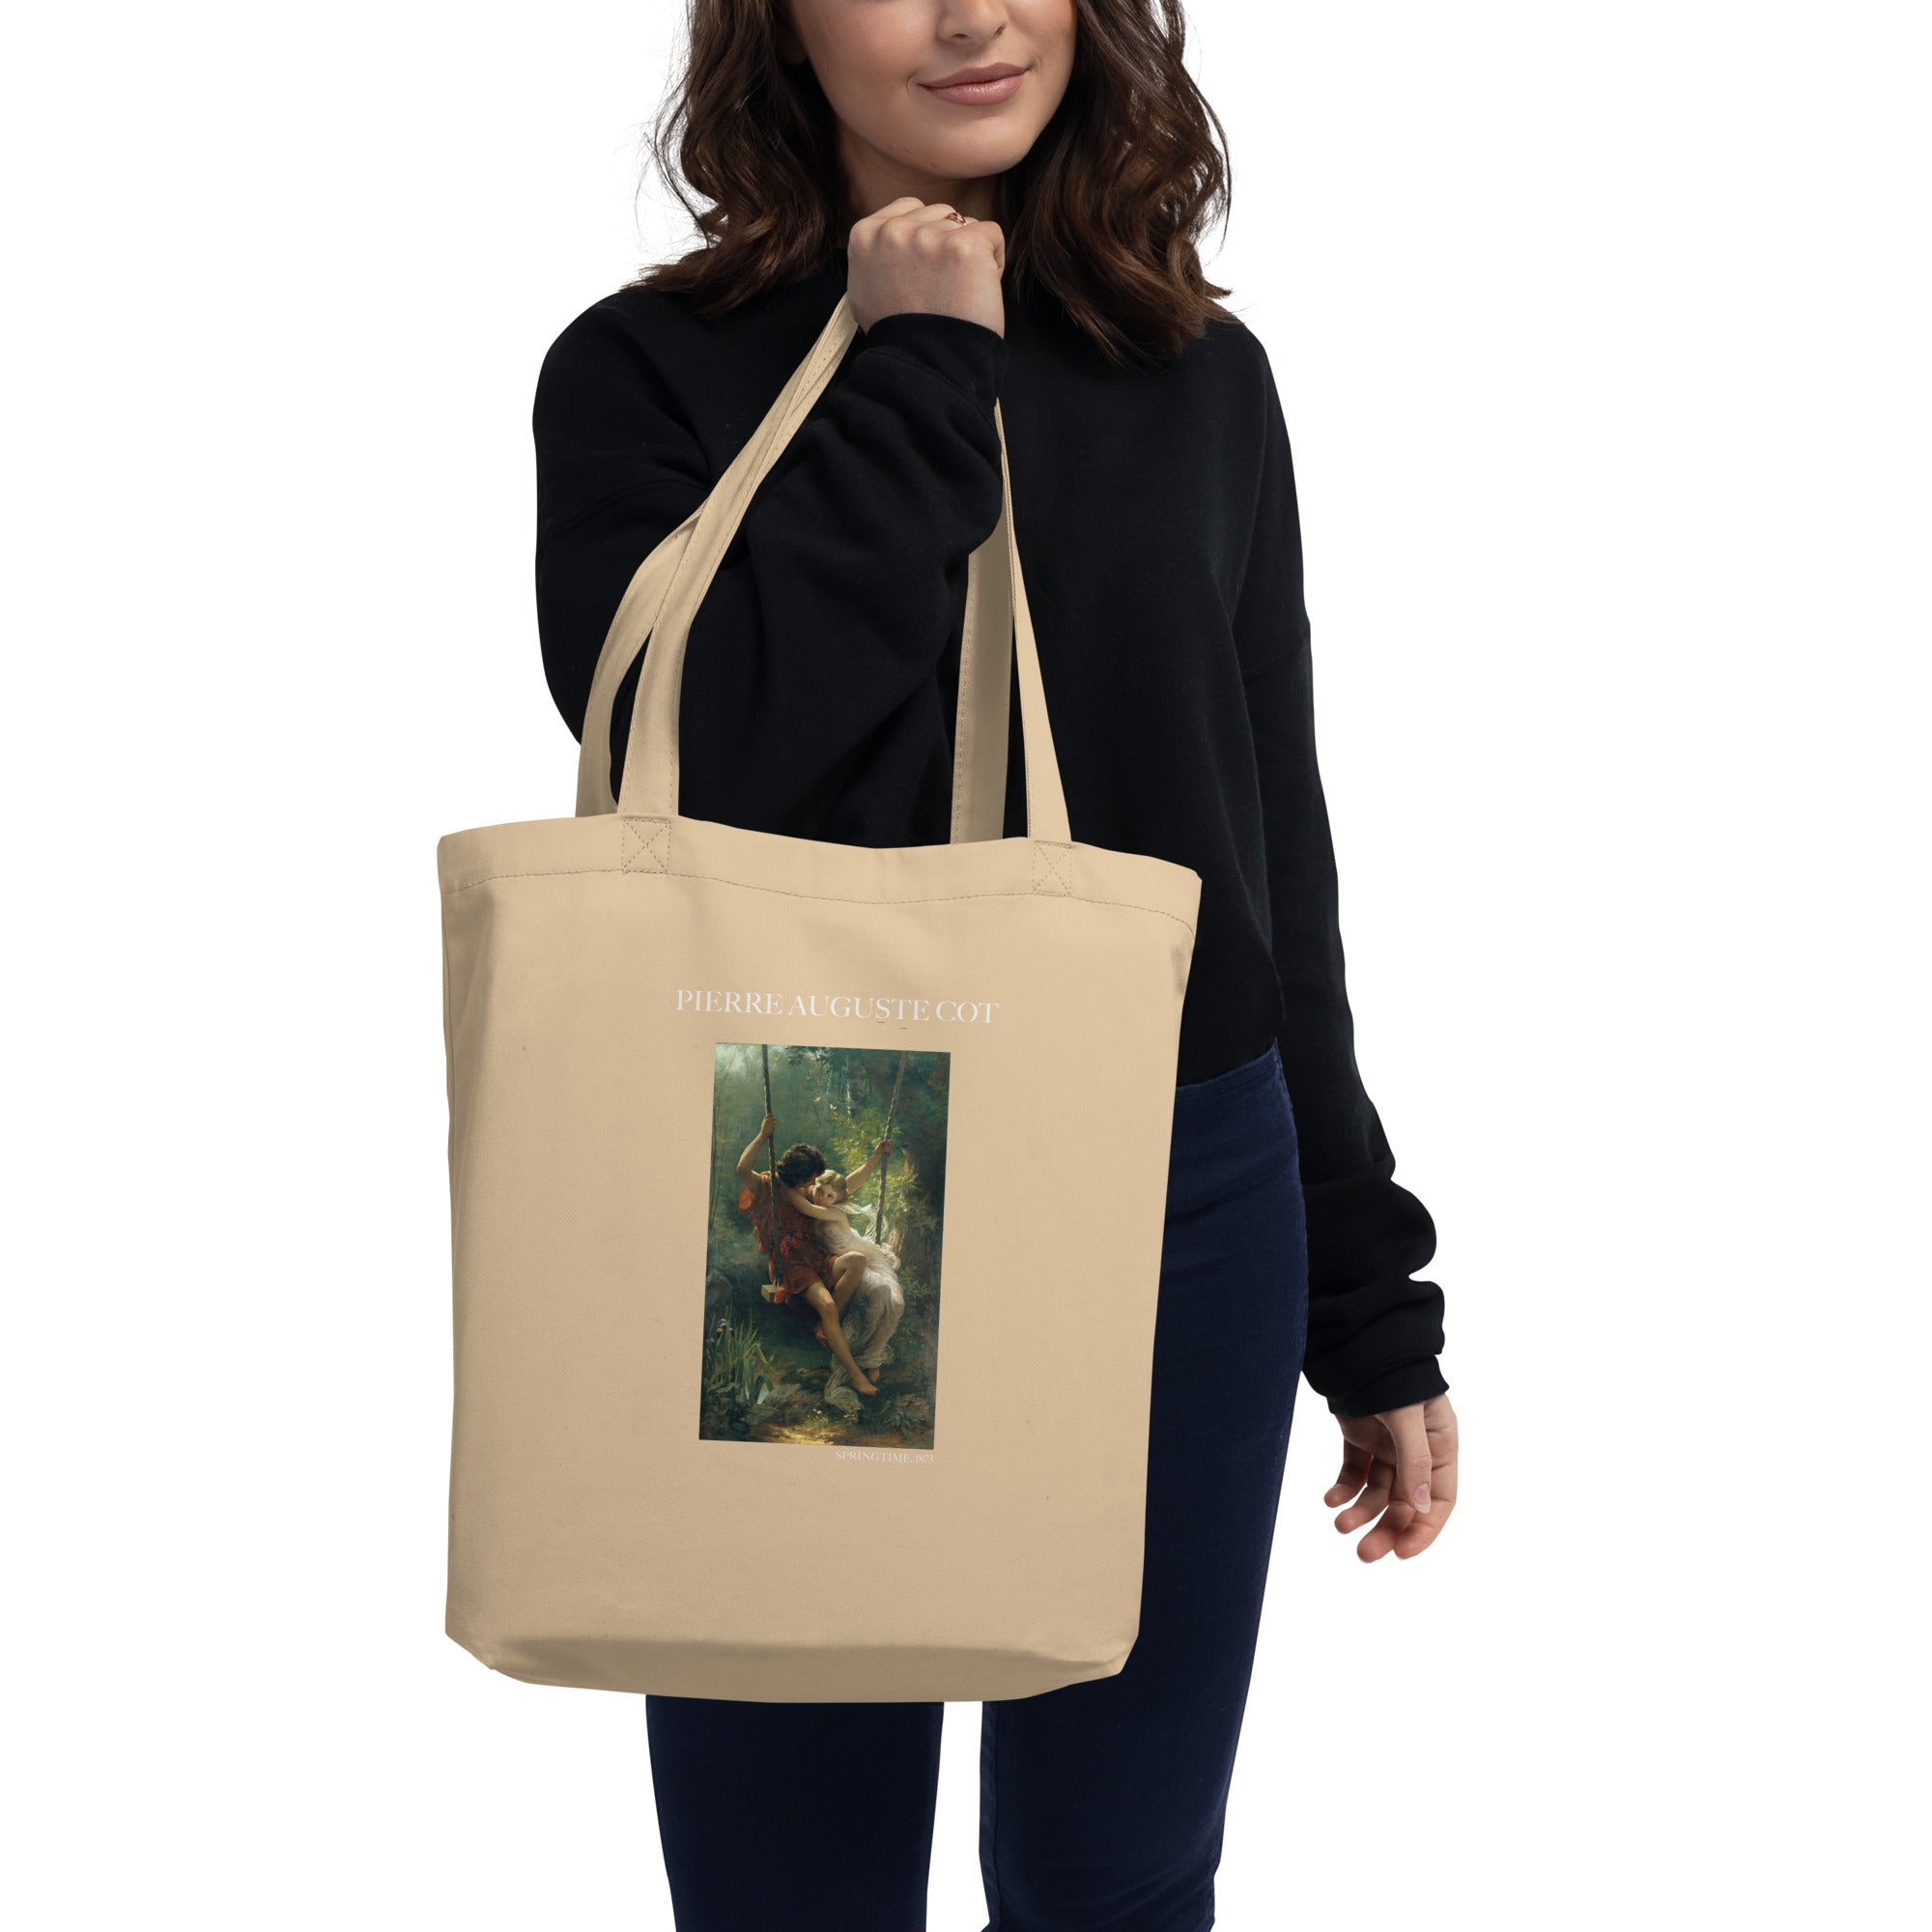 Pierre Auguste Cot 'Springtime' Famous Painting Totebag | Eco Friendly Art Tote Bag